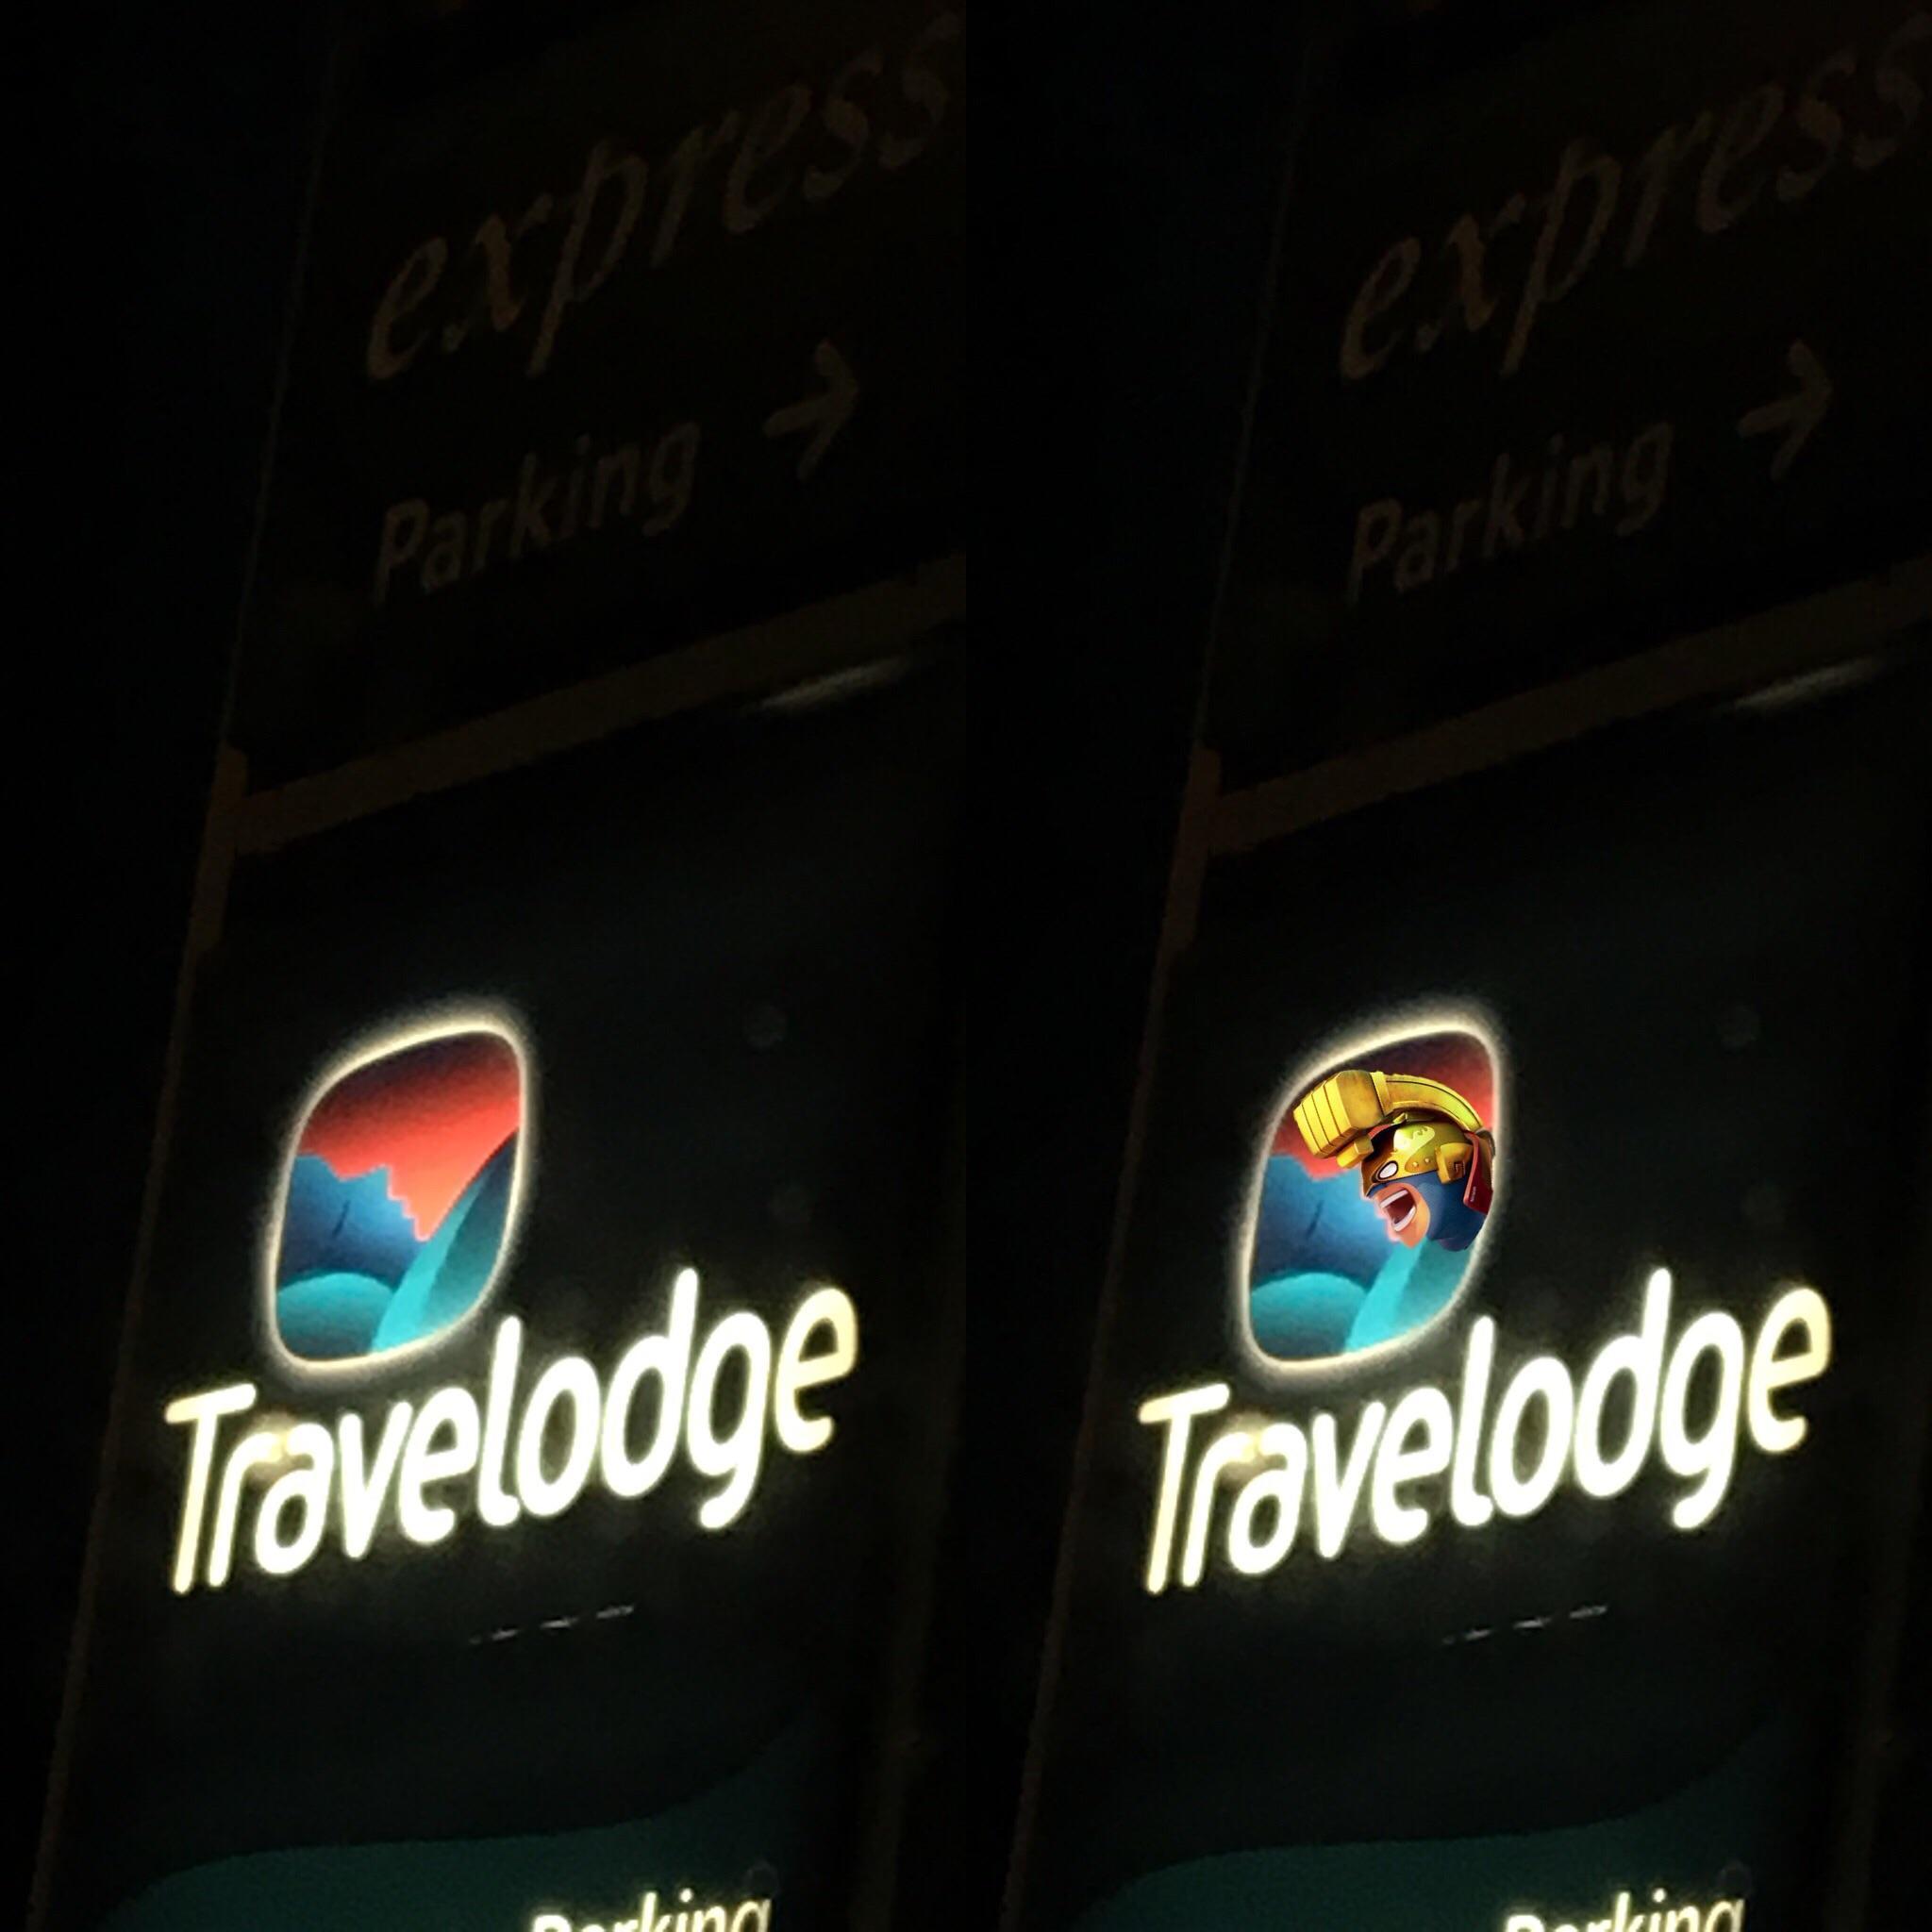 Travelodge Logo - Travelodge logo looks like Max Brass